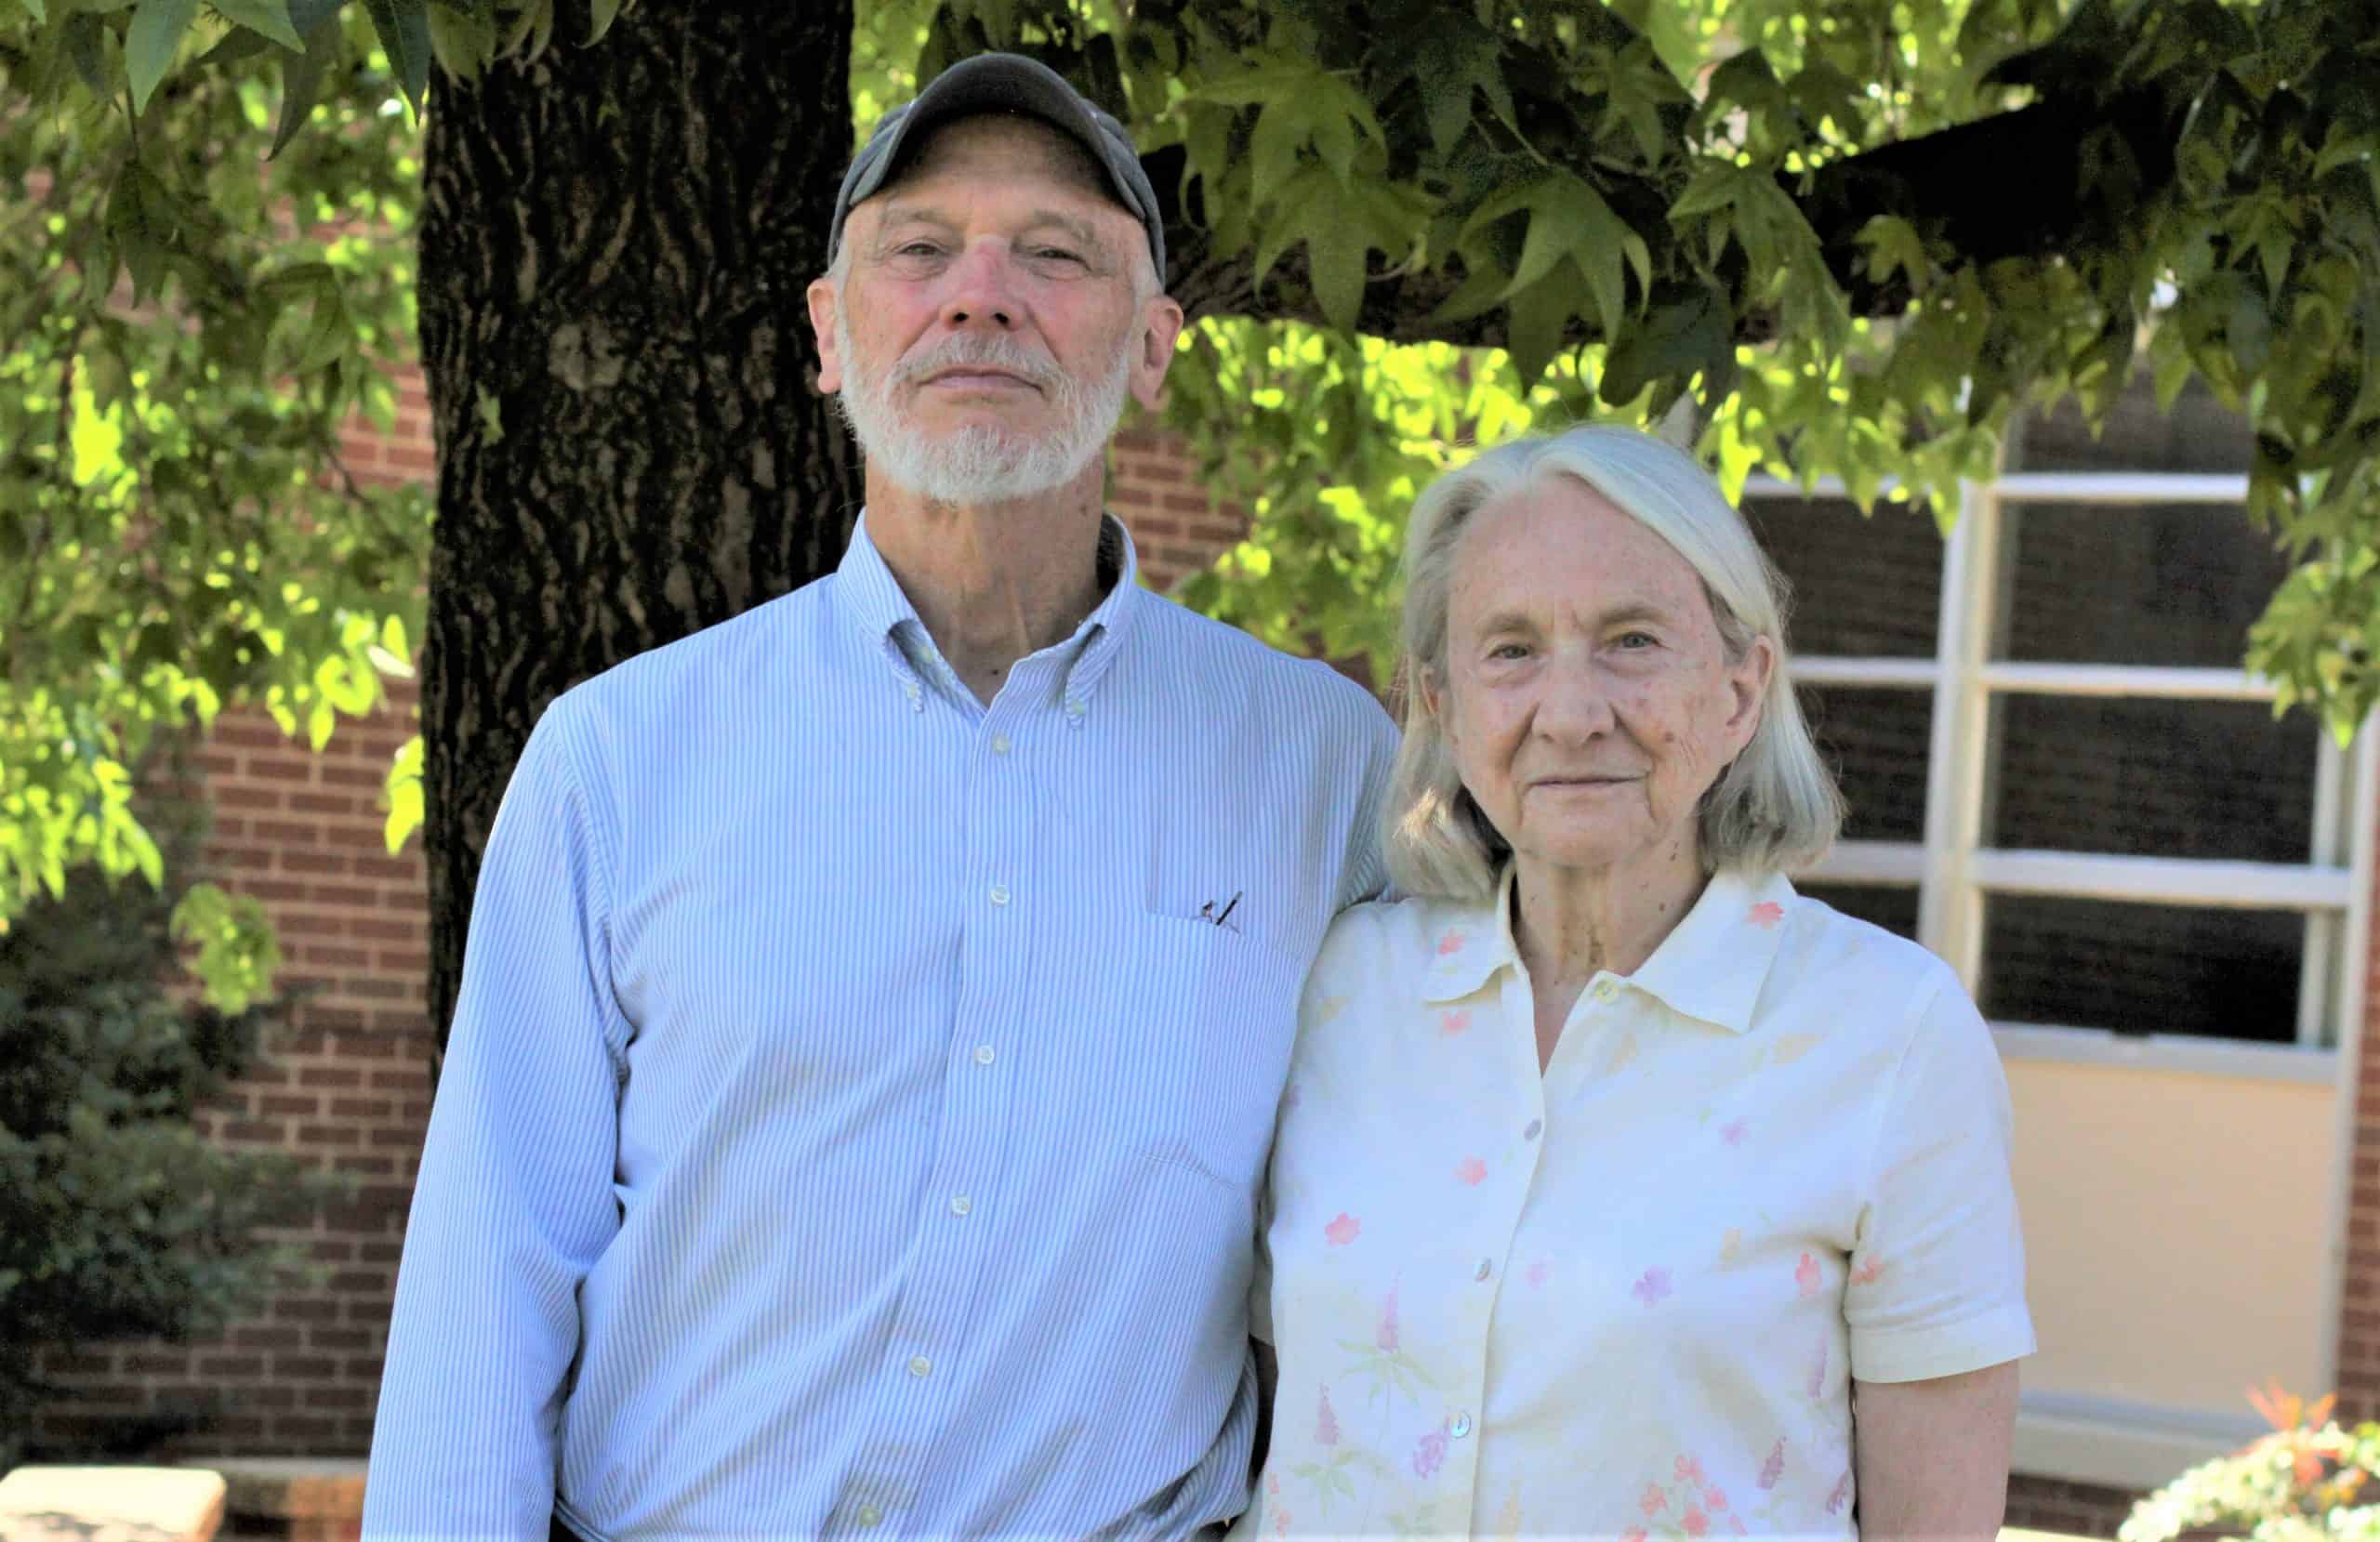 John and Kathryn Stoltzfus Fairfield, both class of '66